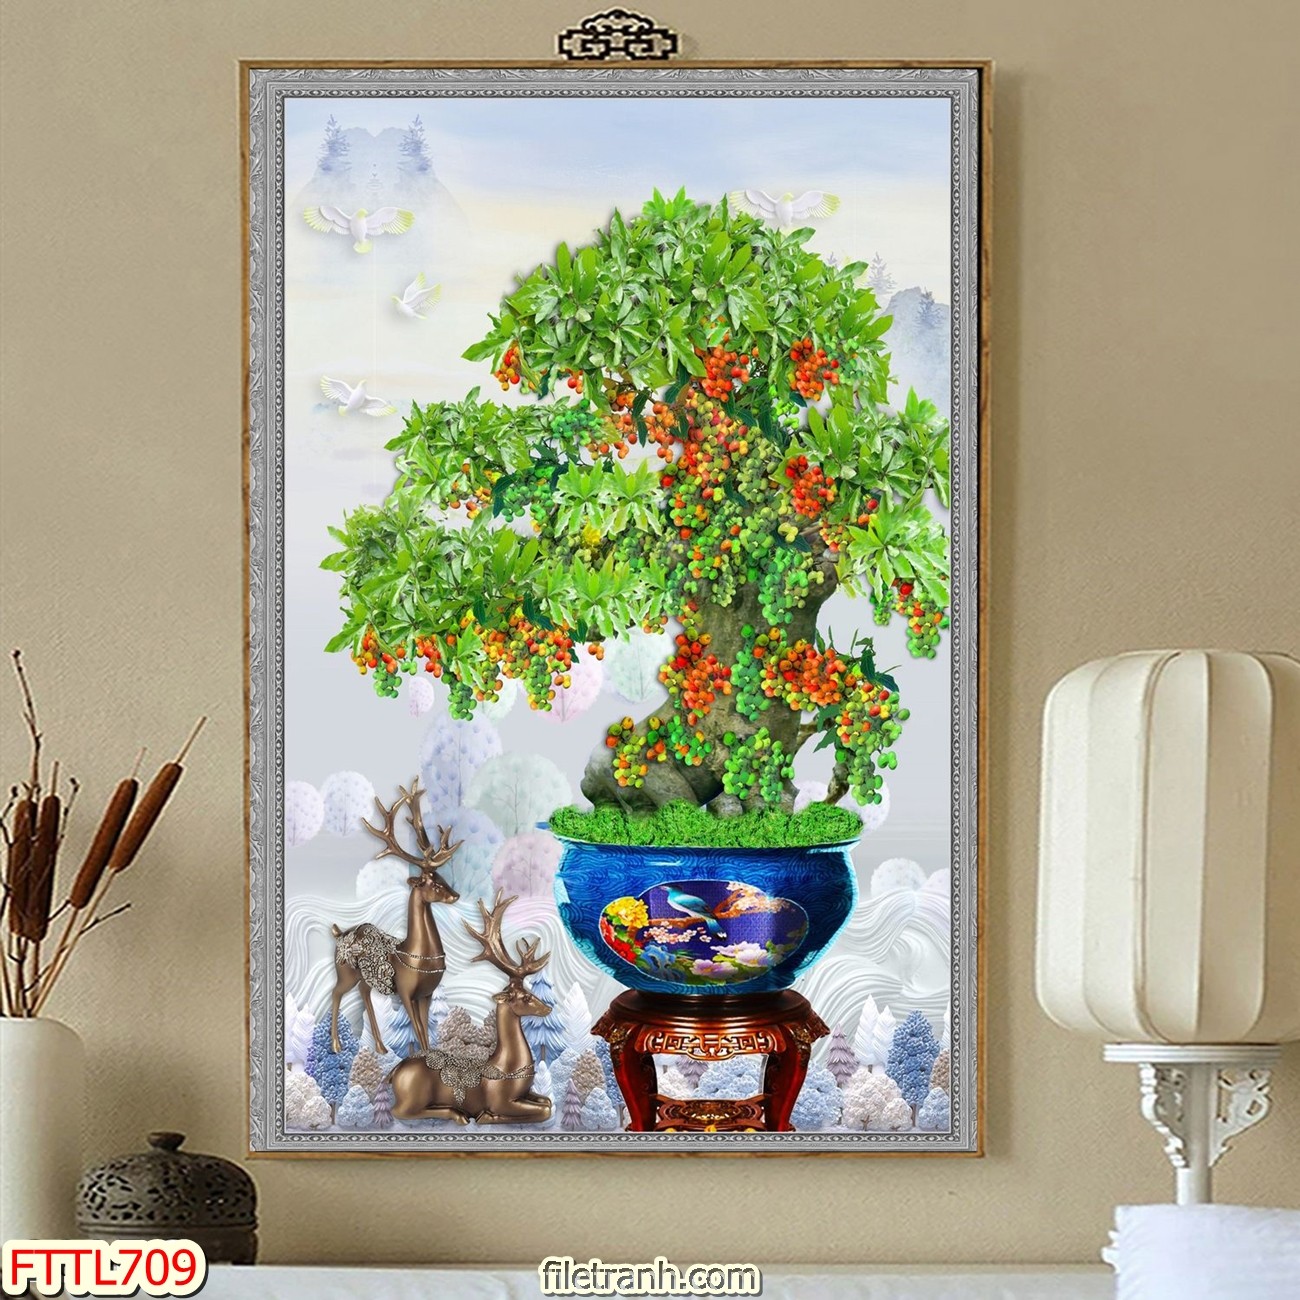 https://filetranh.com/file-tranh-chau-mai-bonsai/file-tranh-chau-mai-bonsai-fttl709.html